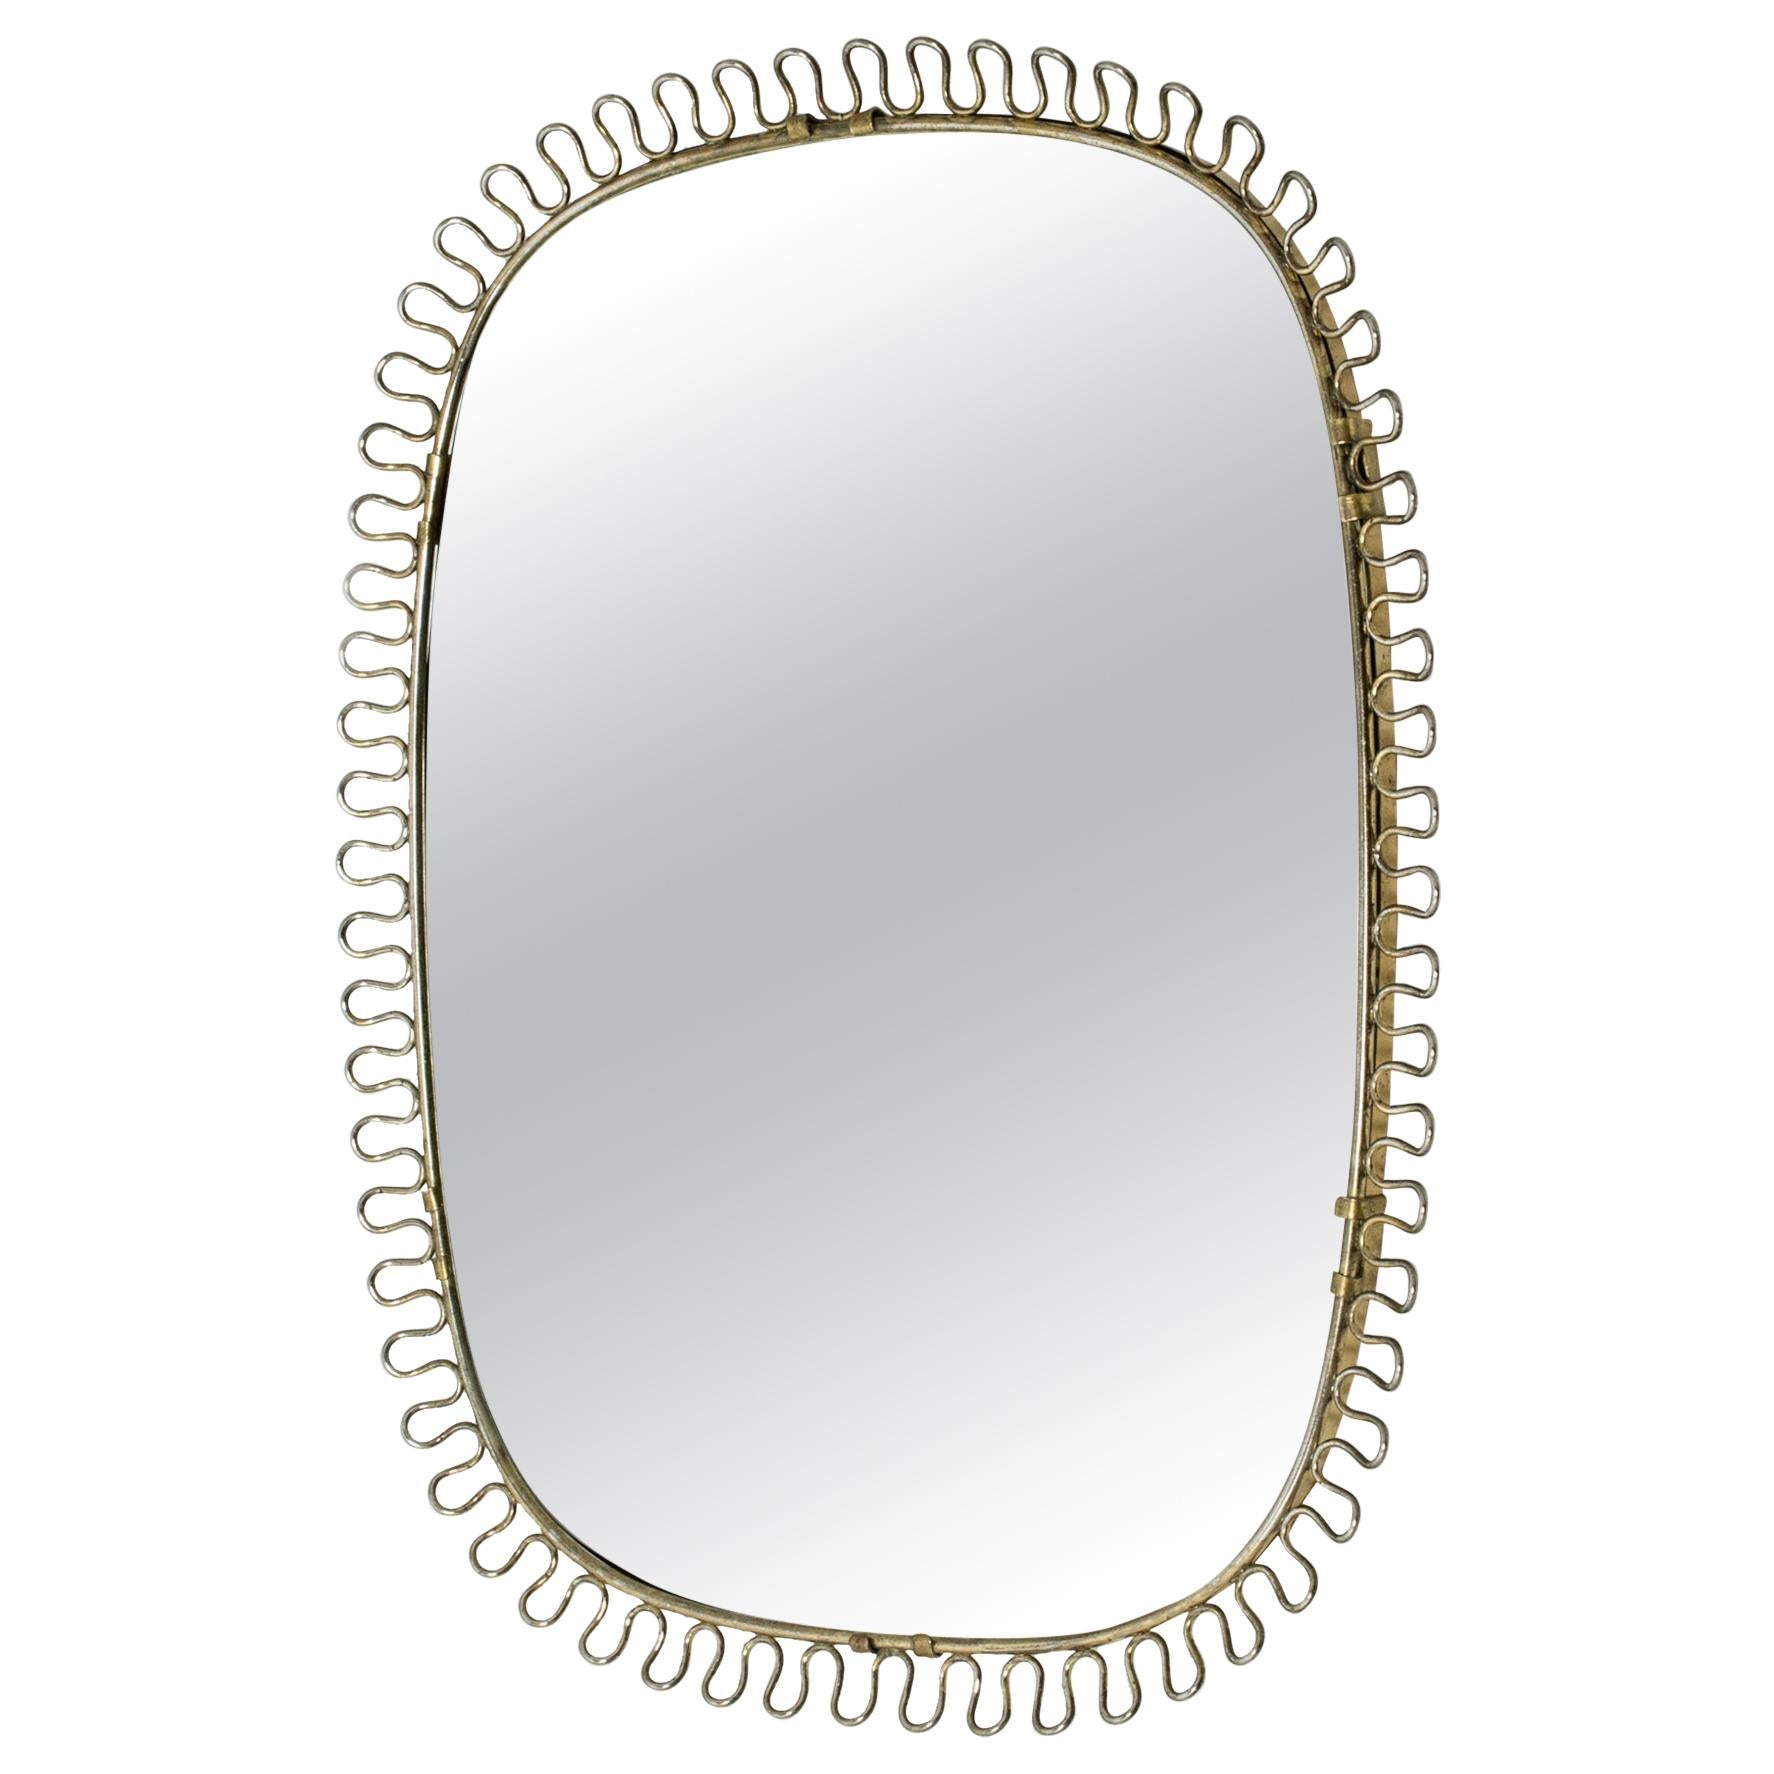 Swedish Midcentury Brass Mirror in the Style of Josef Frank